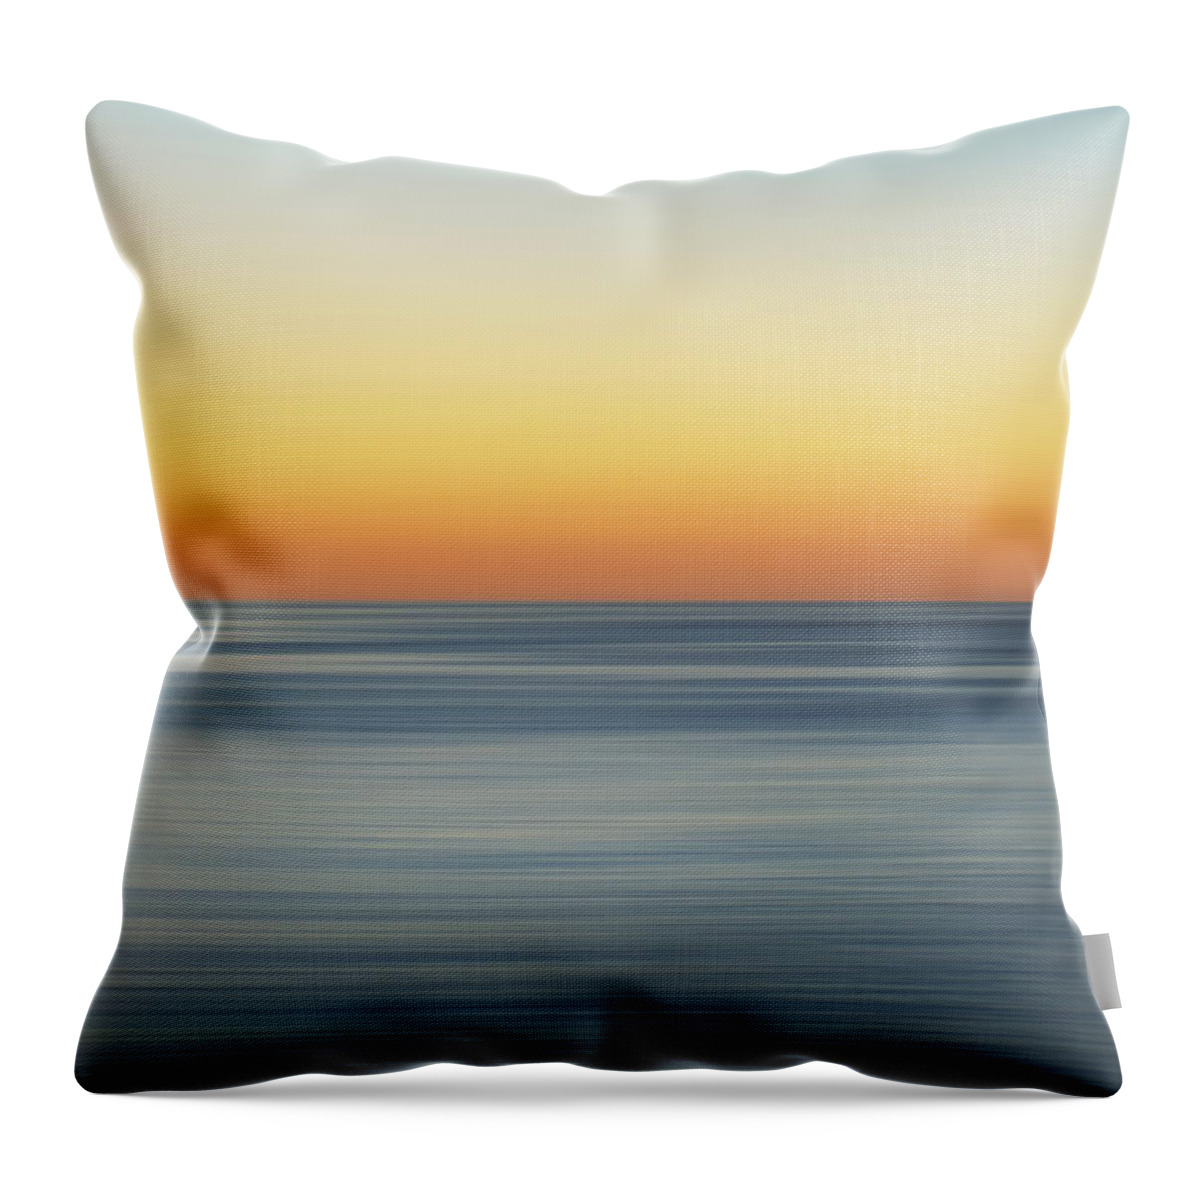 Landscape Throw Pillow featuring the photograph Summer Sunset by Az Jackson